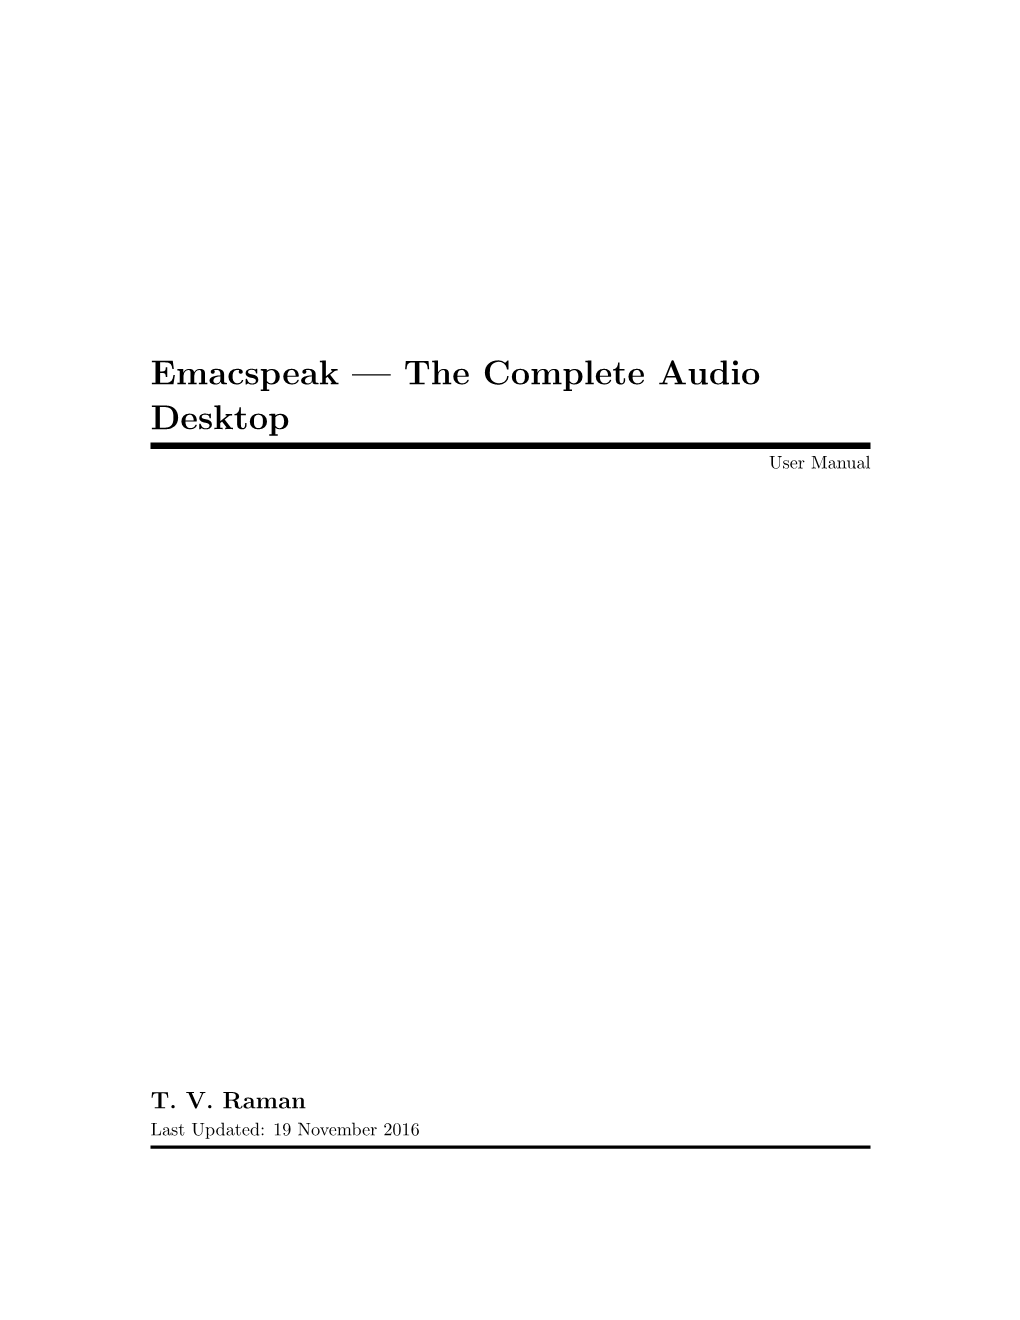 Emacspeak — the Complete Audio Desktop User Manual